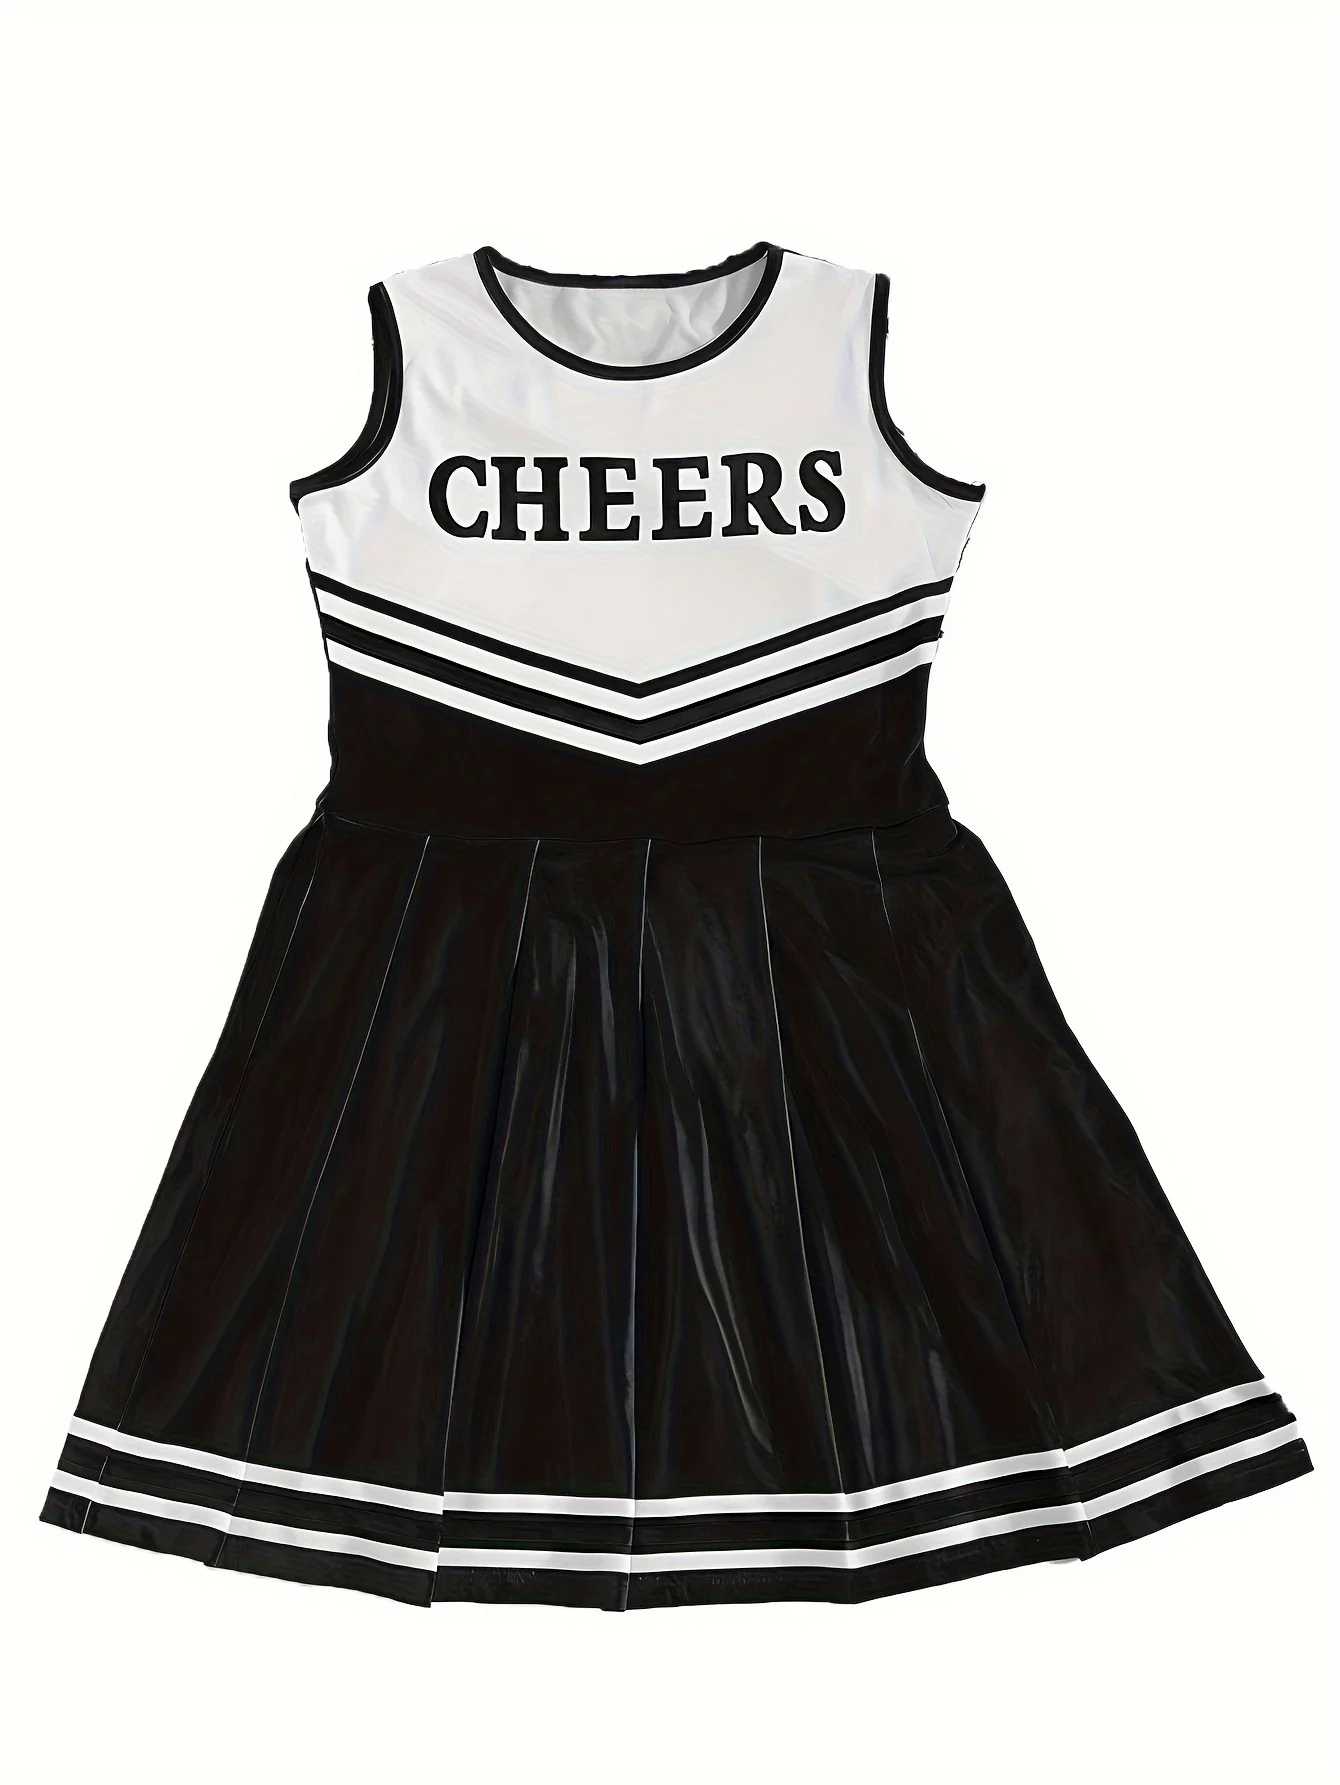 

Adult female performance stage sexy cheerleading uniform cheerleader girl pompoms suit Short skirt sleeveless cheerful costume